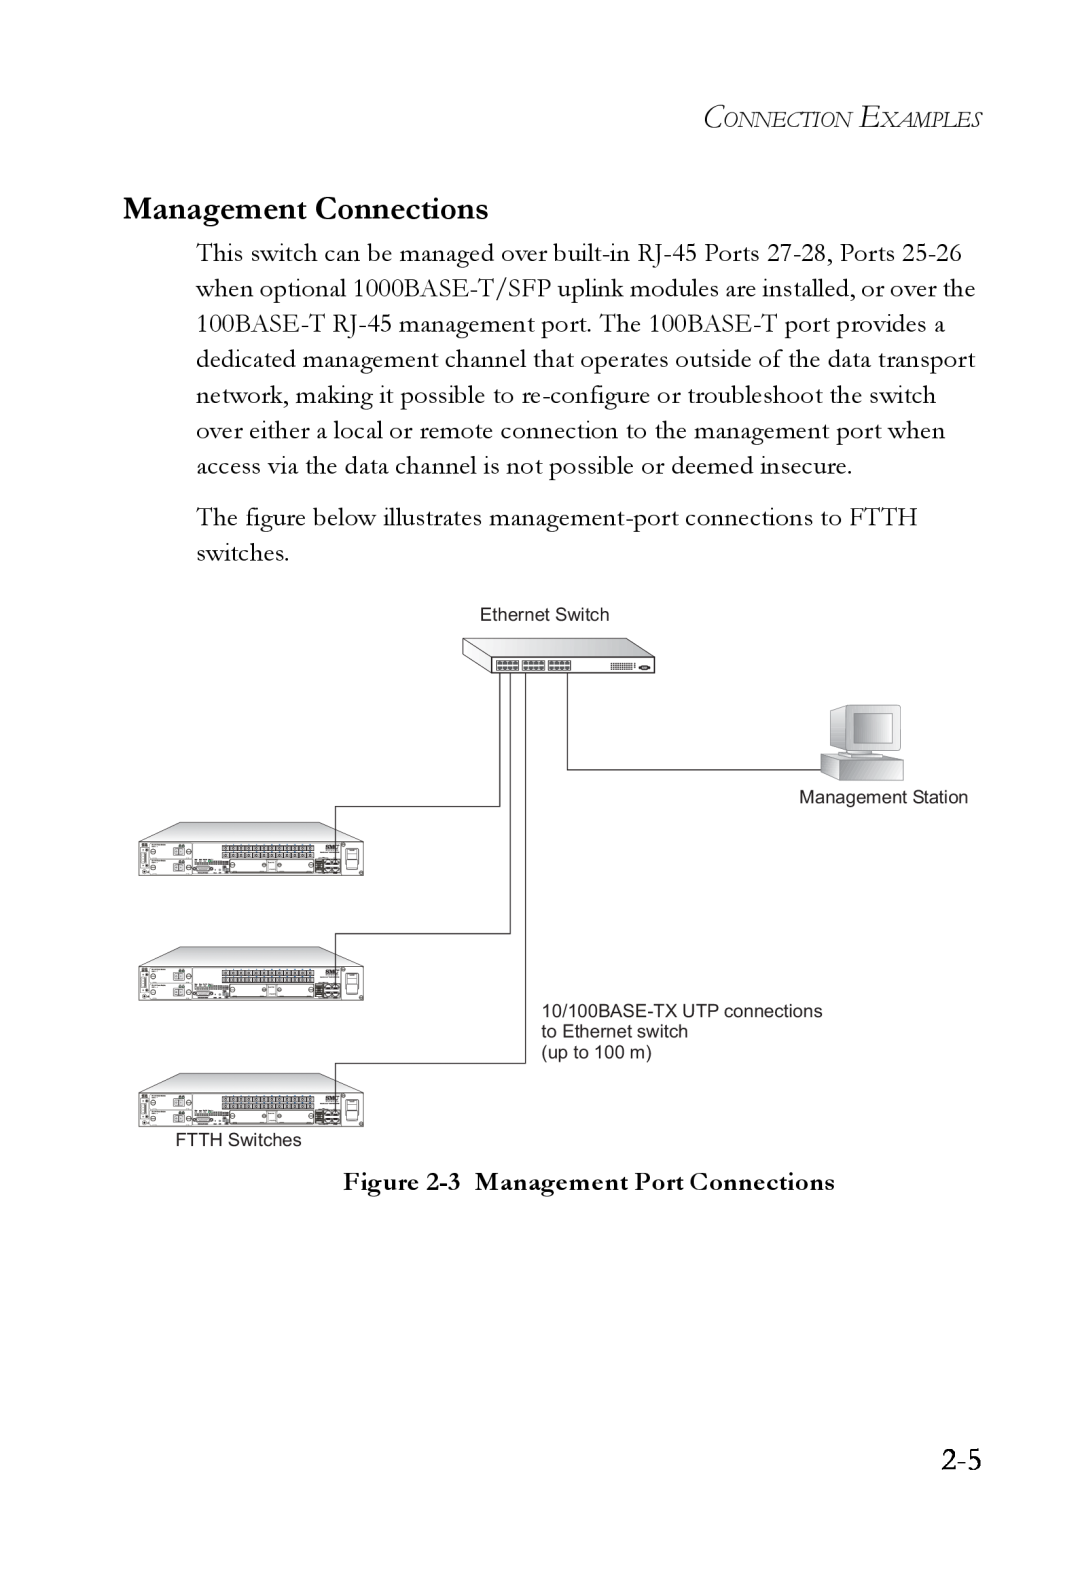 SMC Networks SMC7824M/FSW manual Management Connections, 3 Management Port Connections 